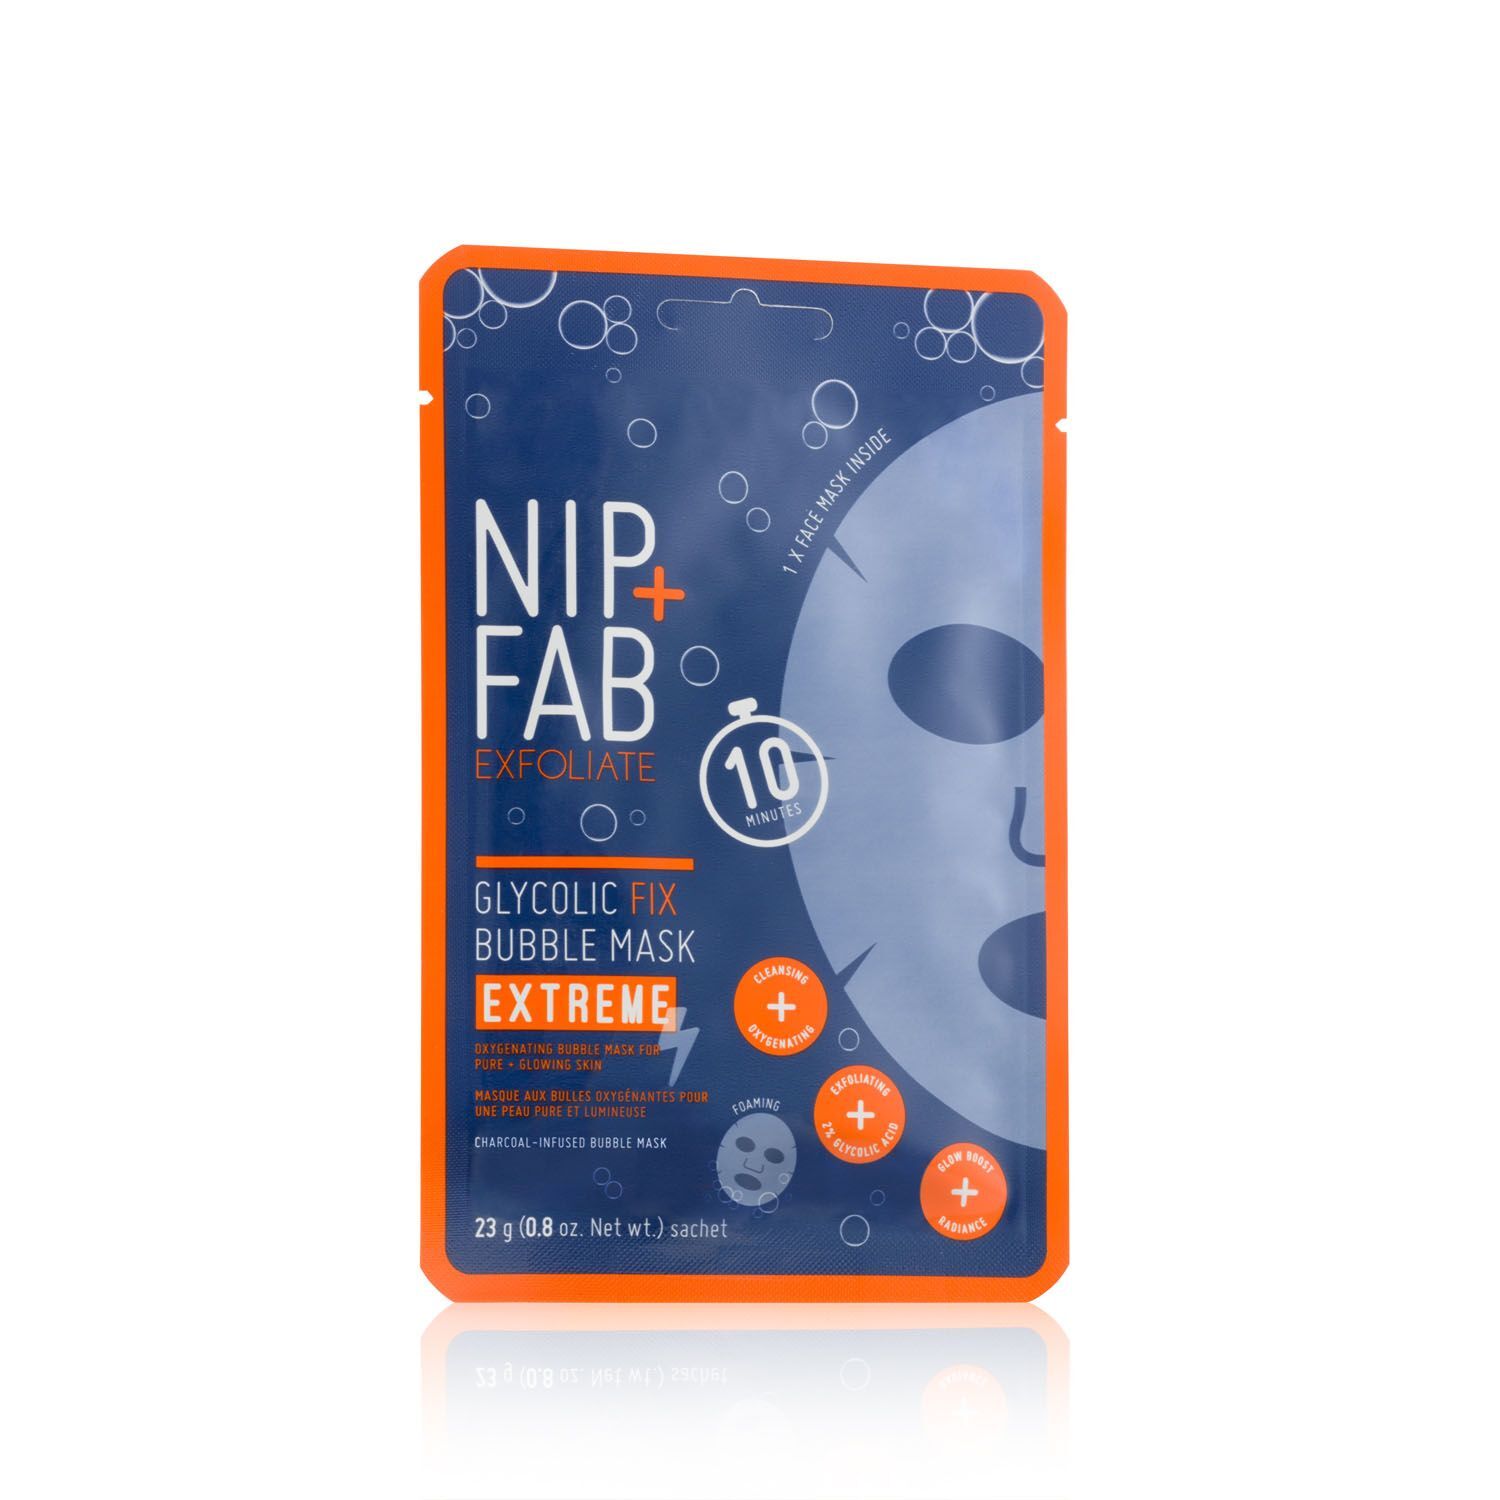 Nip & Fab Ltd Nip+fab Exfoliate Bubble Mask Maschera Viso Esfoliante 28g